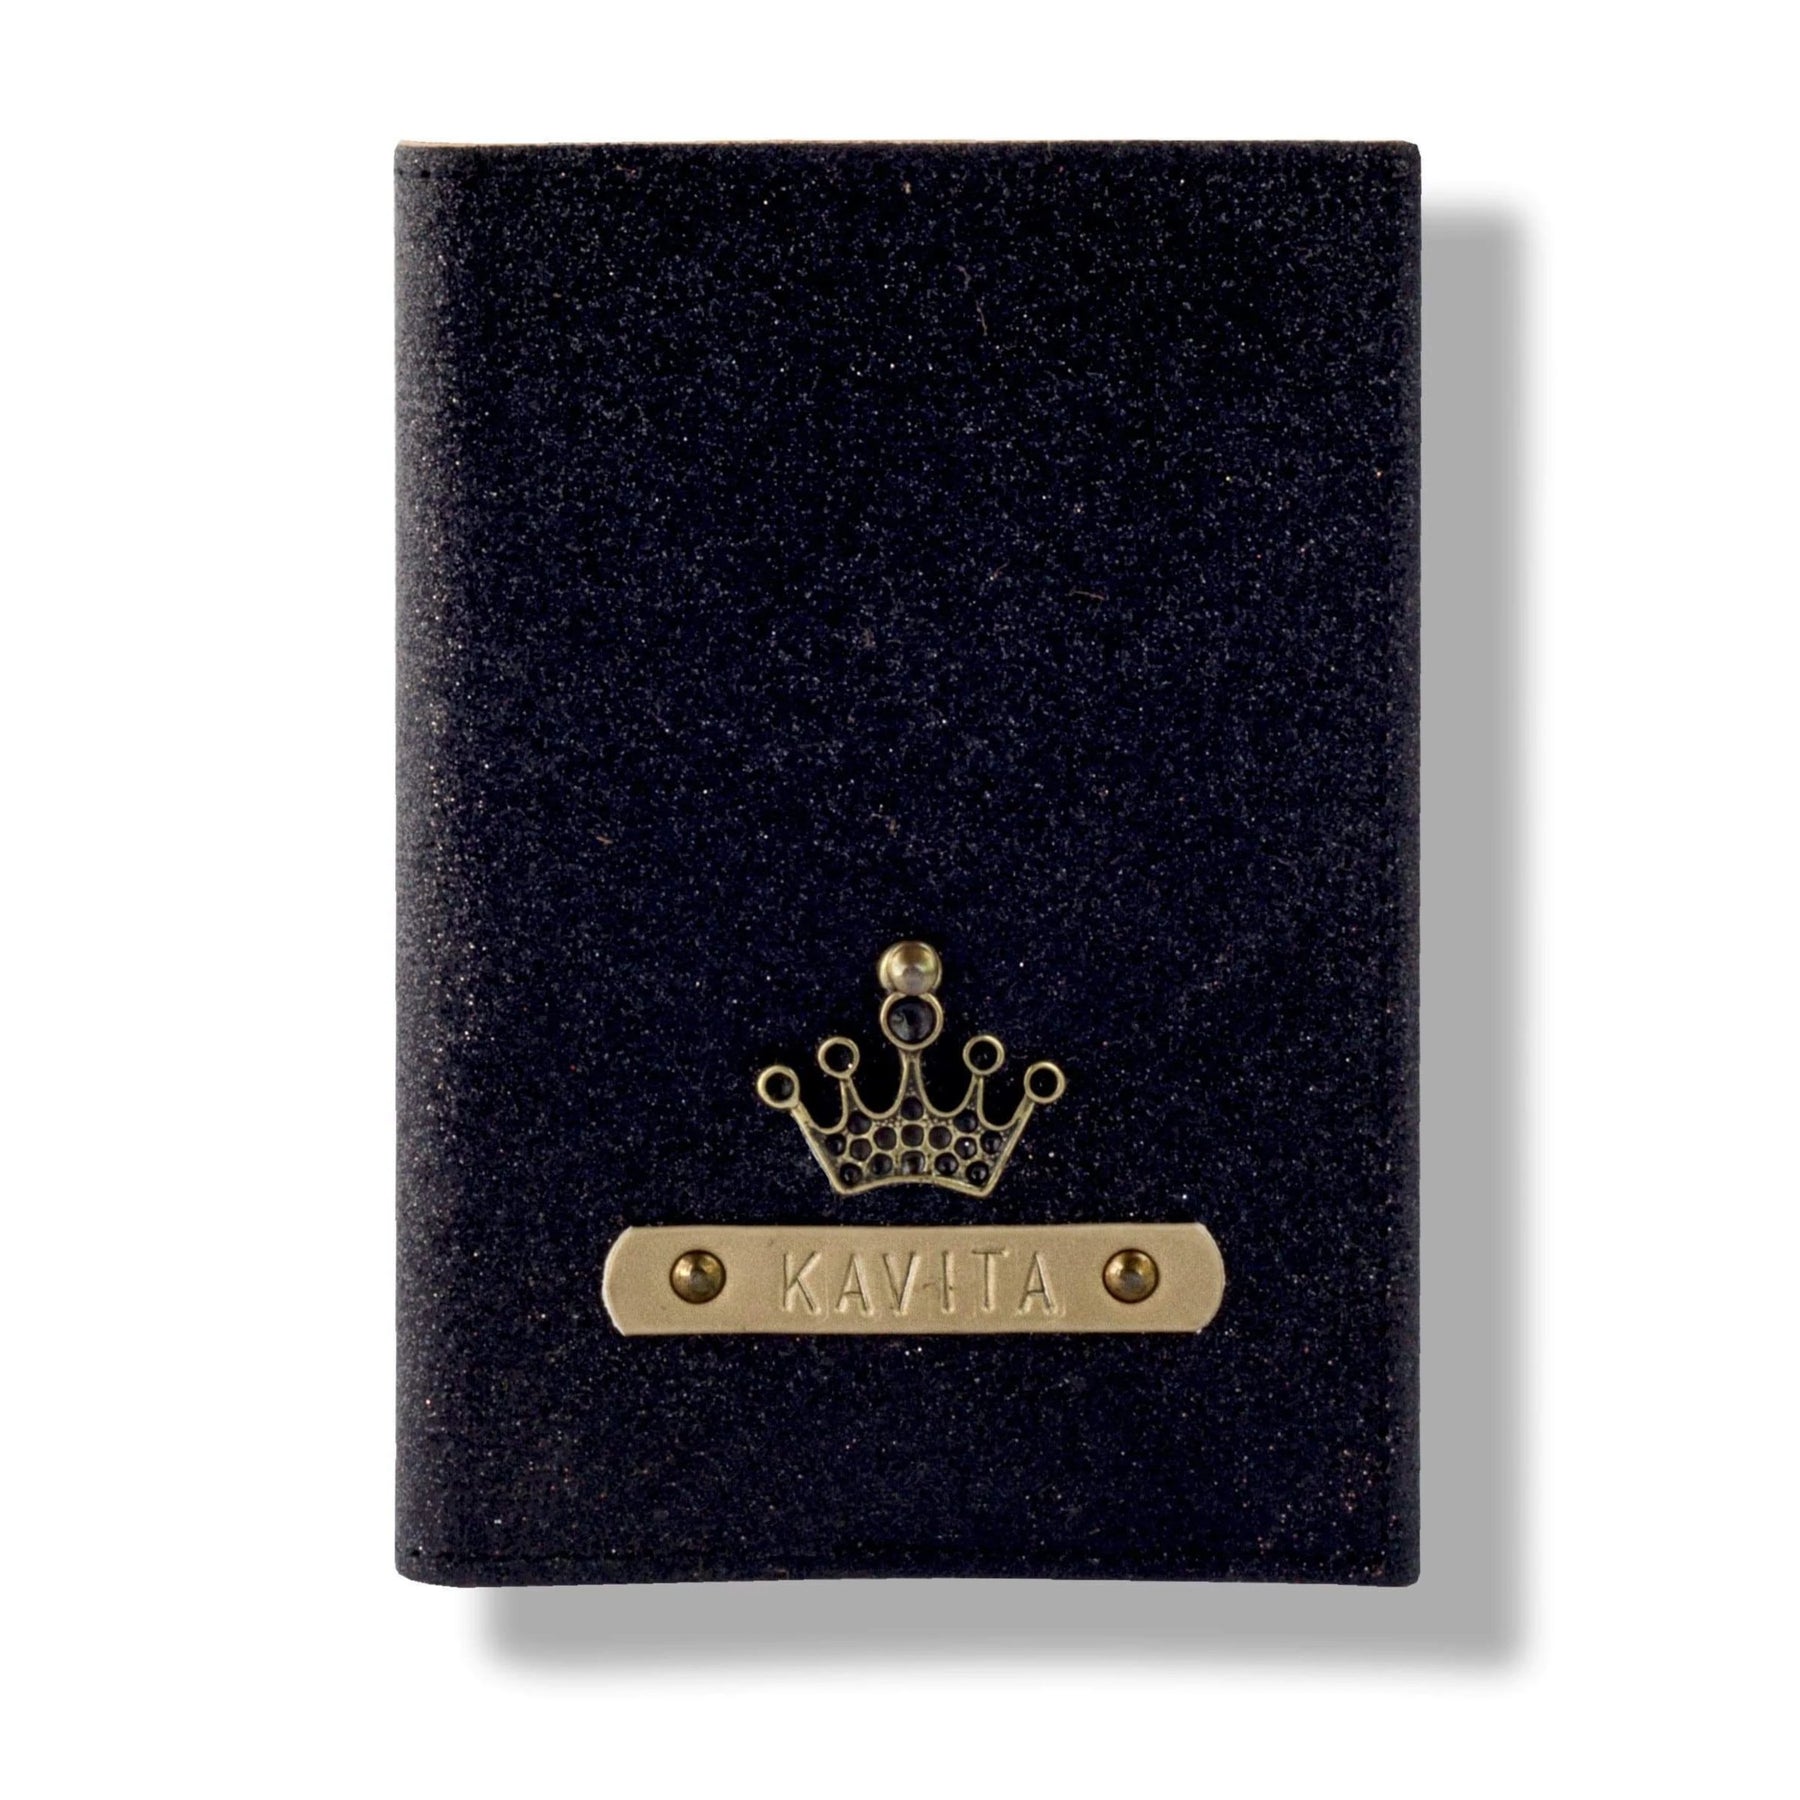 The Messy Corner Passport Cover Personalized Passport Cover - Black Glitter